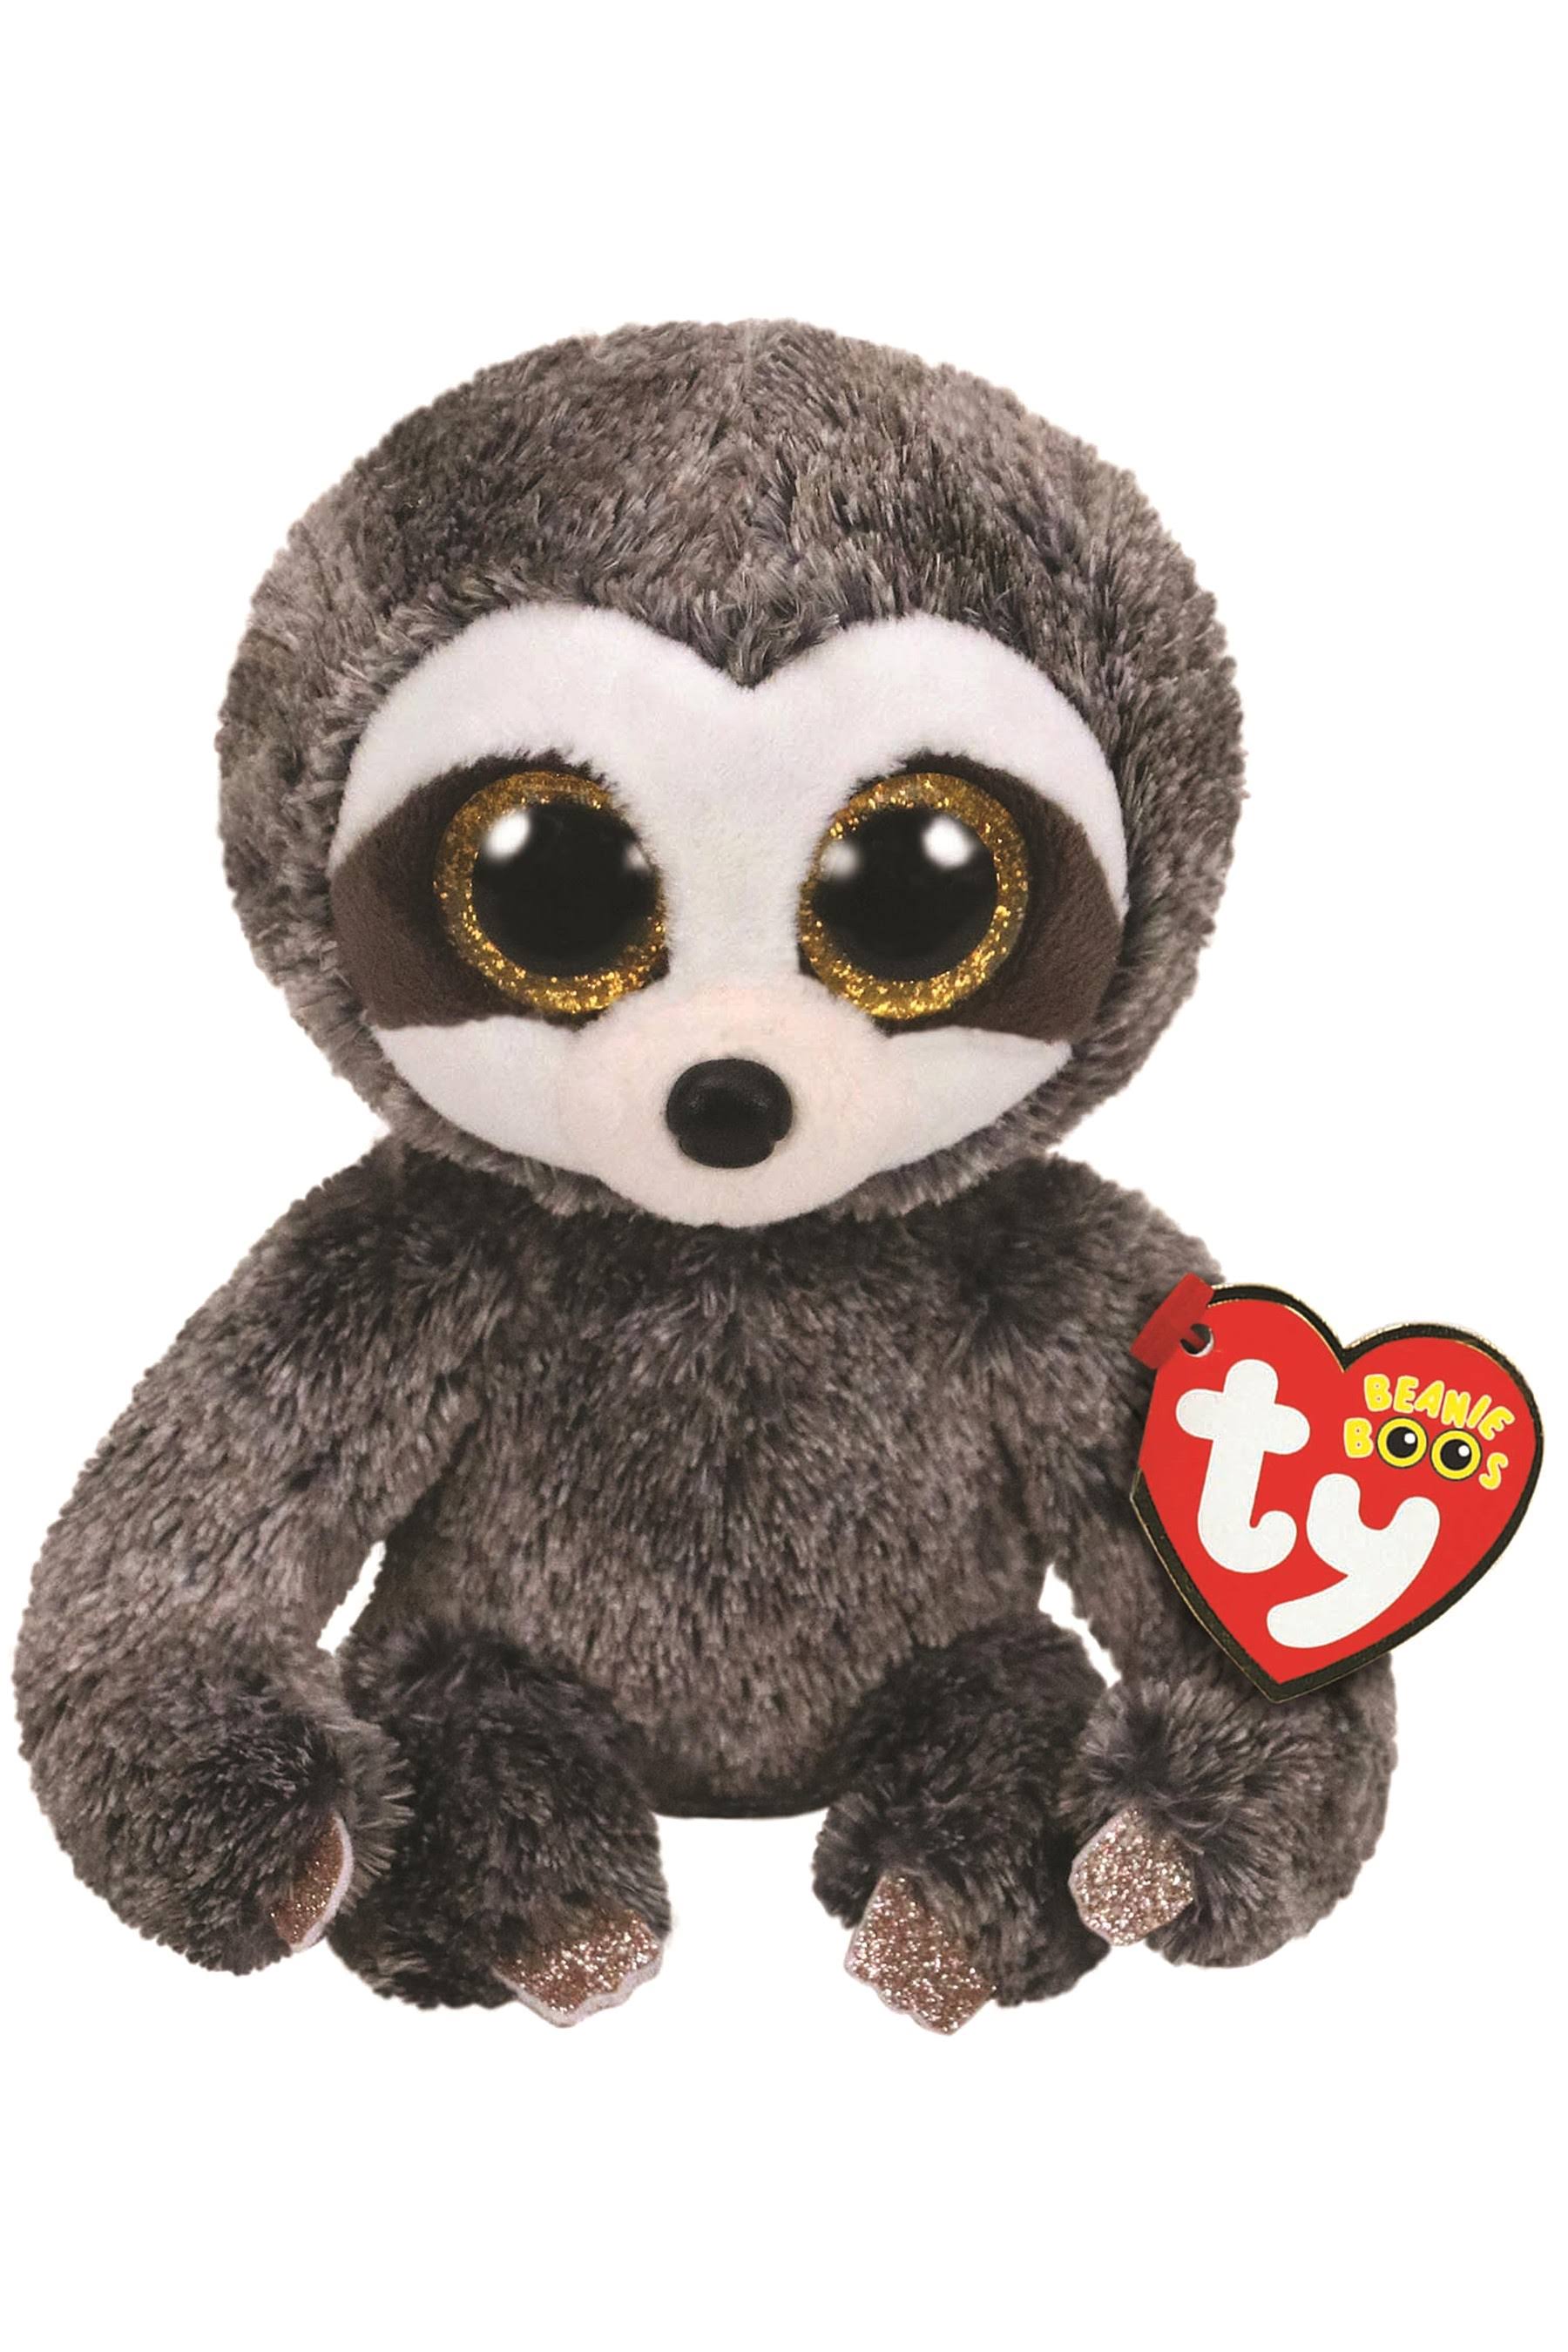 TY Beanie Boo Sloth Plush Toy - Dangler, 15cm